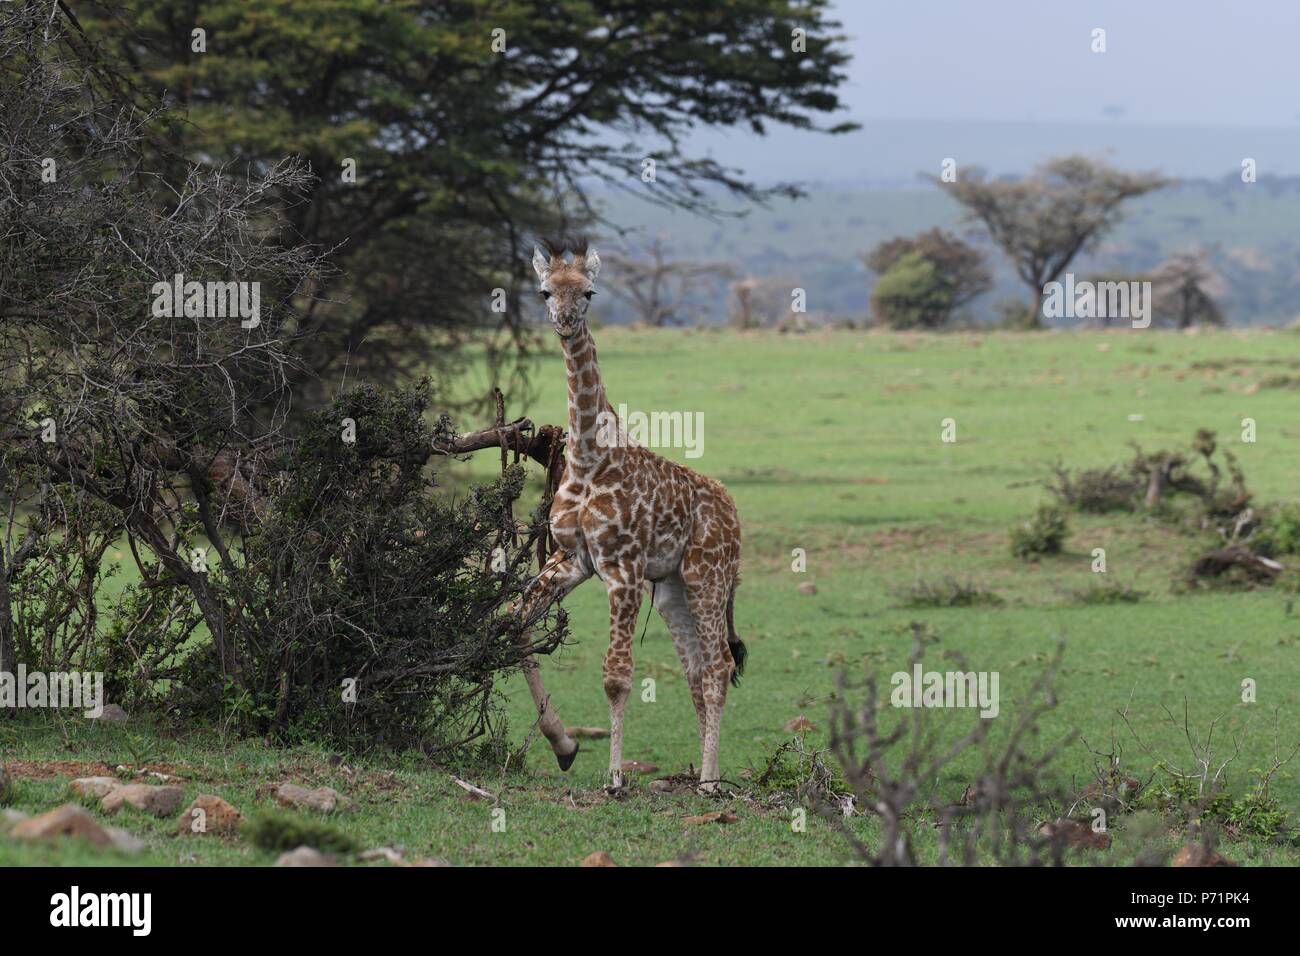 Young /baby only 1 day old. The Maasai giraffe (Giraffa camelopardalis tippelskirchii). Picture taken in the valley at Mahali Mzuri, Maasai Mara. Stock Photo